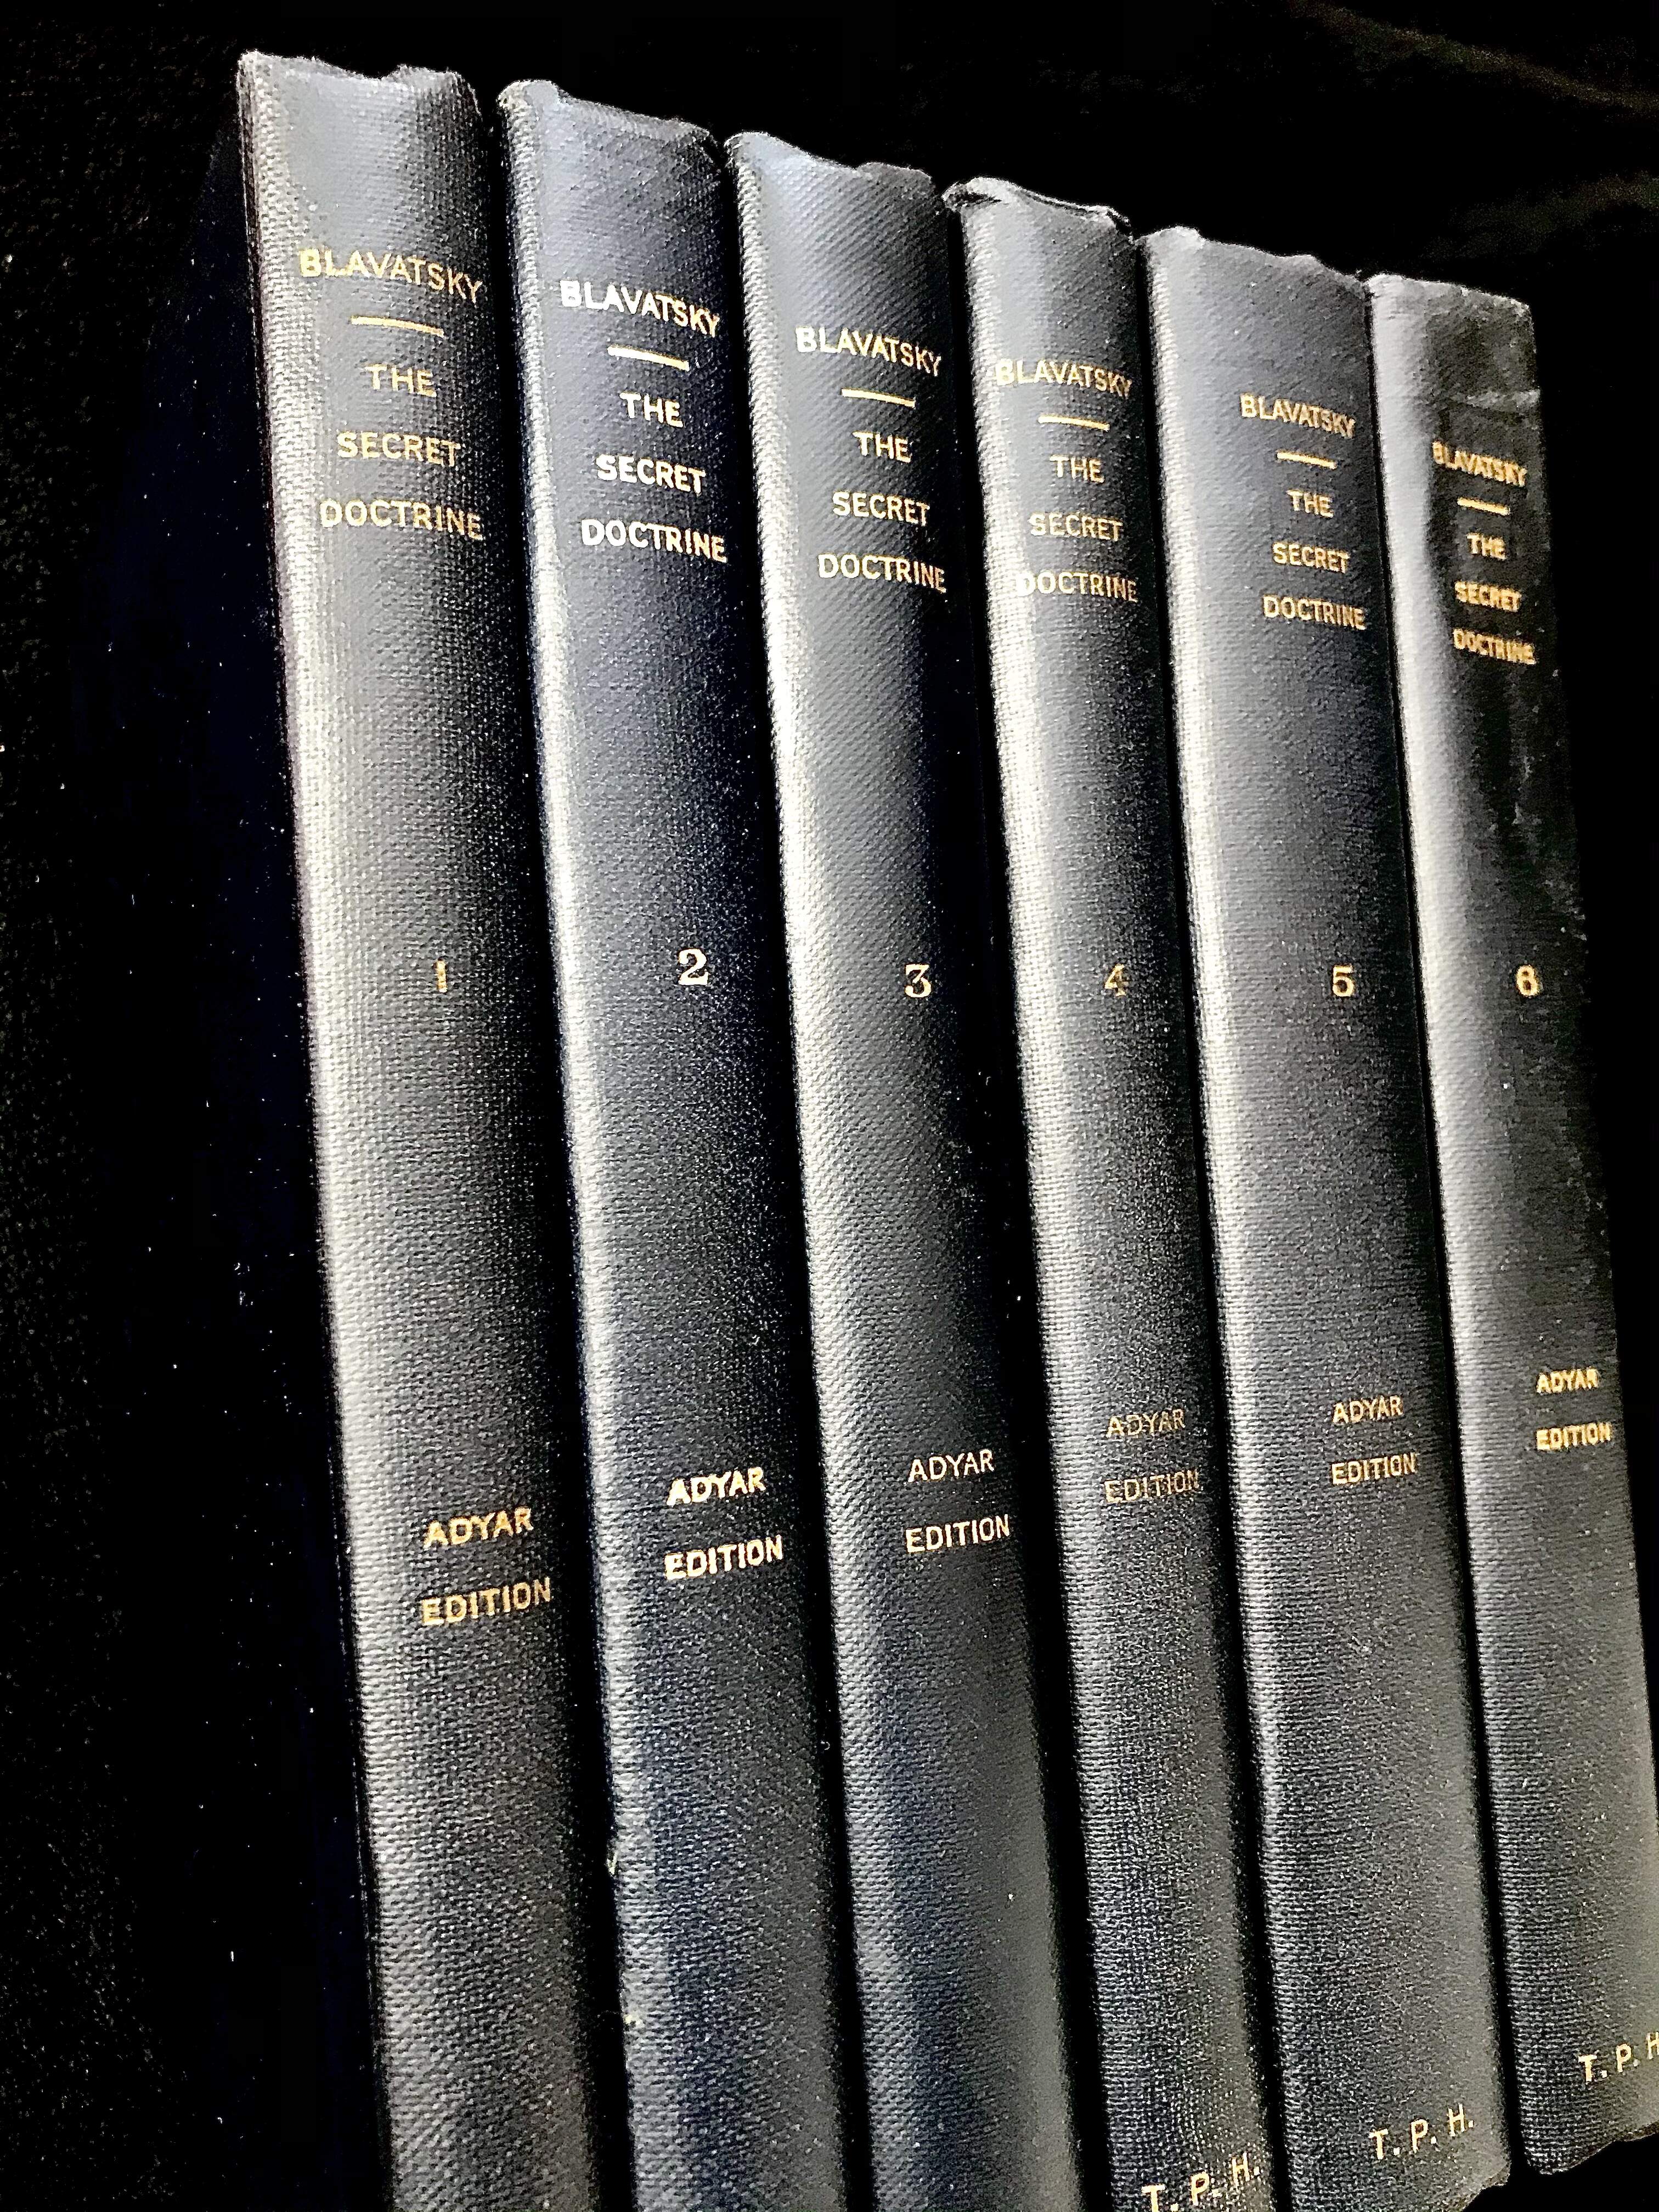 The Secret Doctrine by H. P. Blavatsky 6 Volumes